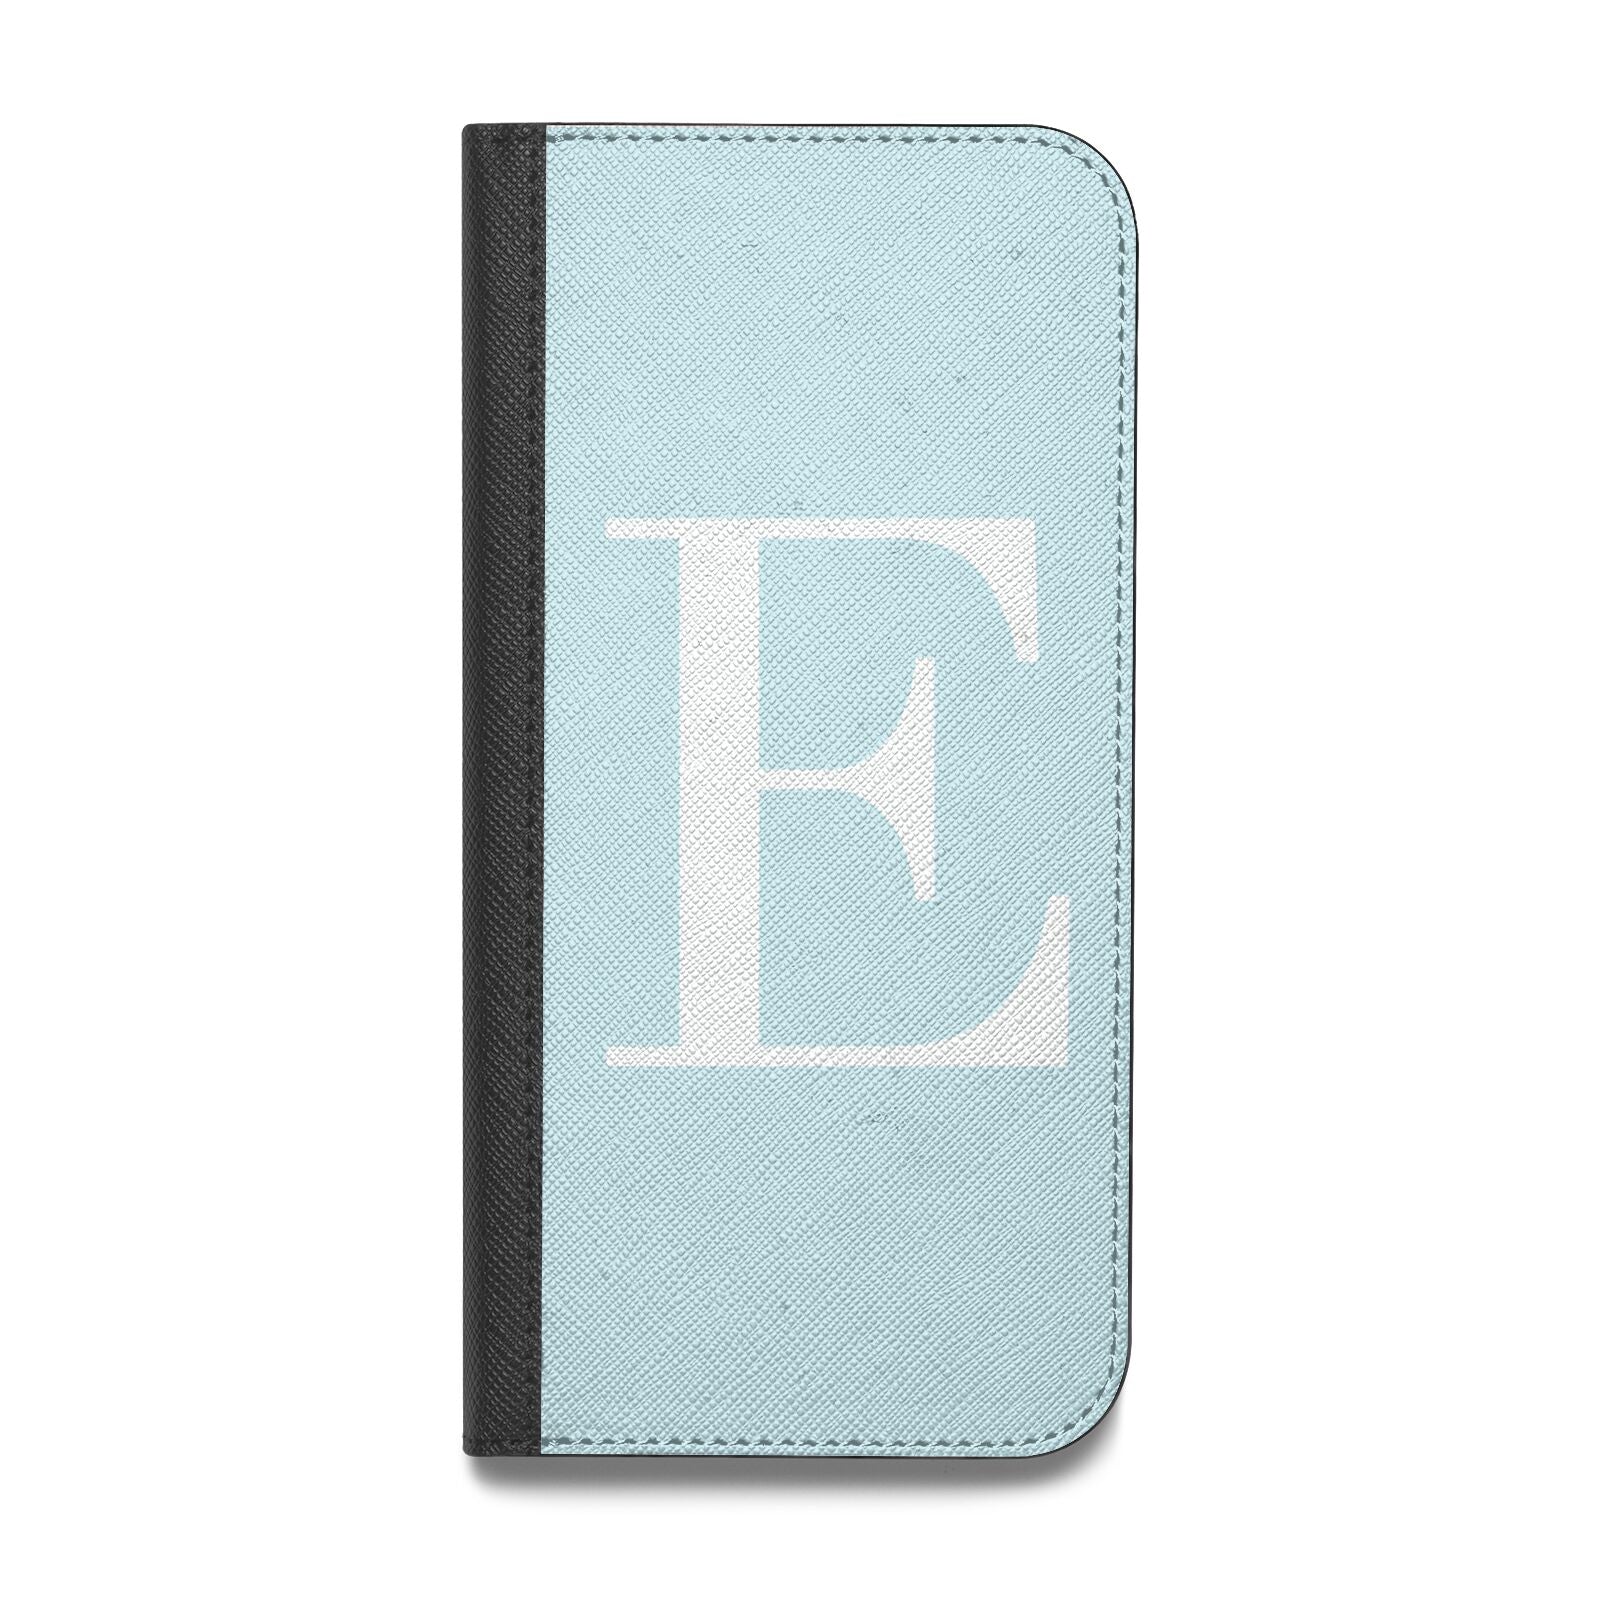 Blue with White Personalised Monogram Vegan Leather Flip iPhone Case